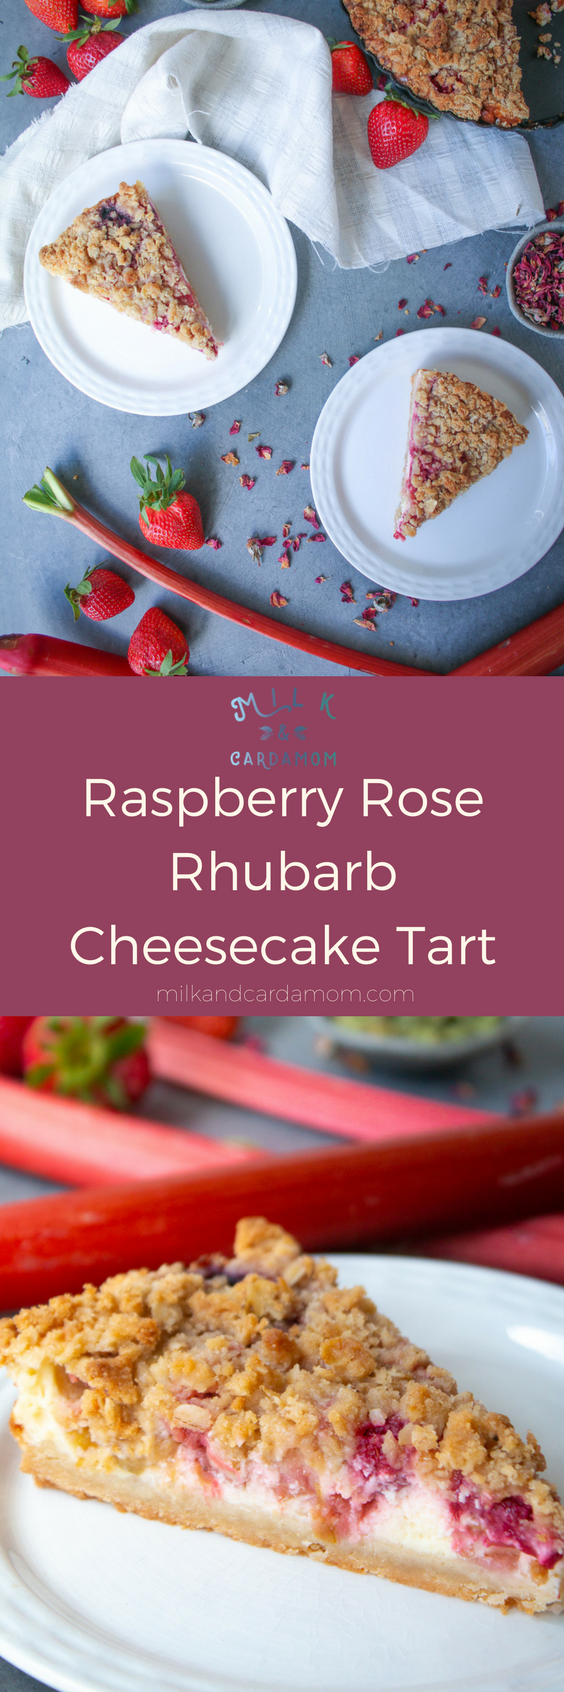 raspberry, rhubarb, rose, tart, cheesecake, rhubarb recipe, baking, recipe, cardamom, food, easy tart recipe, streusel